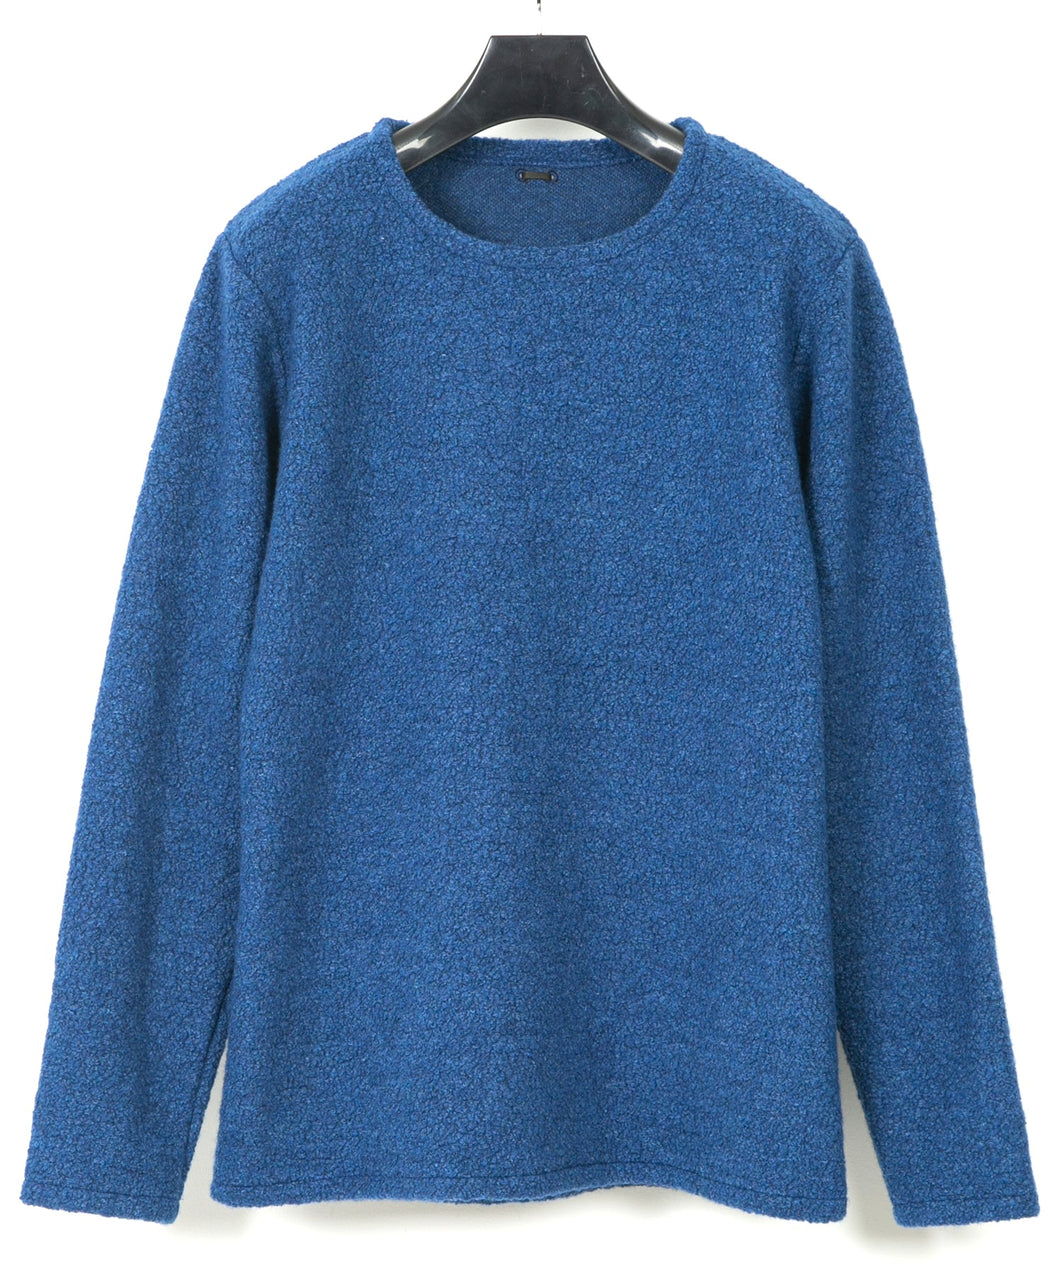 Recycled Wool Teddy Fleece Crew Neck T-shirt - BLUE